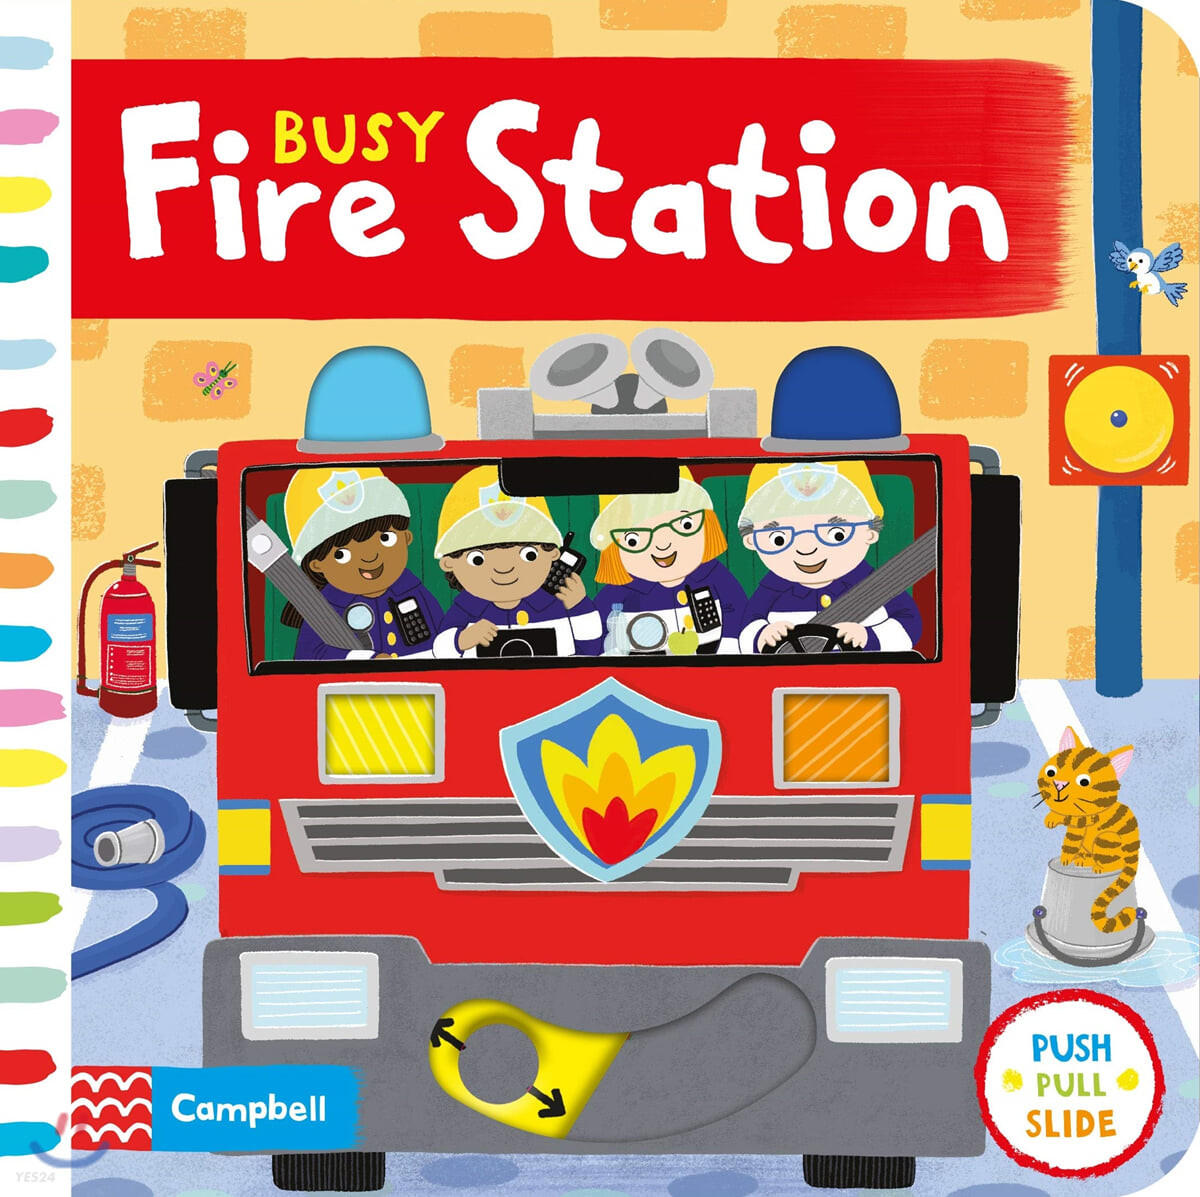 Busy fire station 책표지